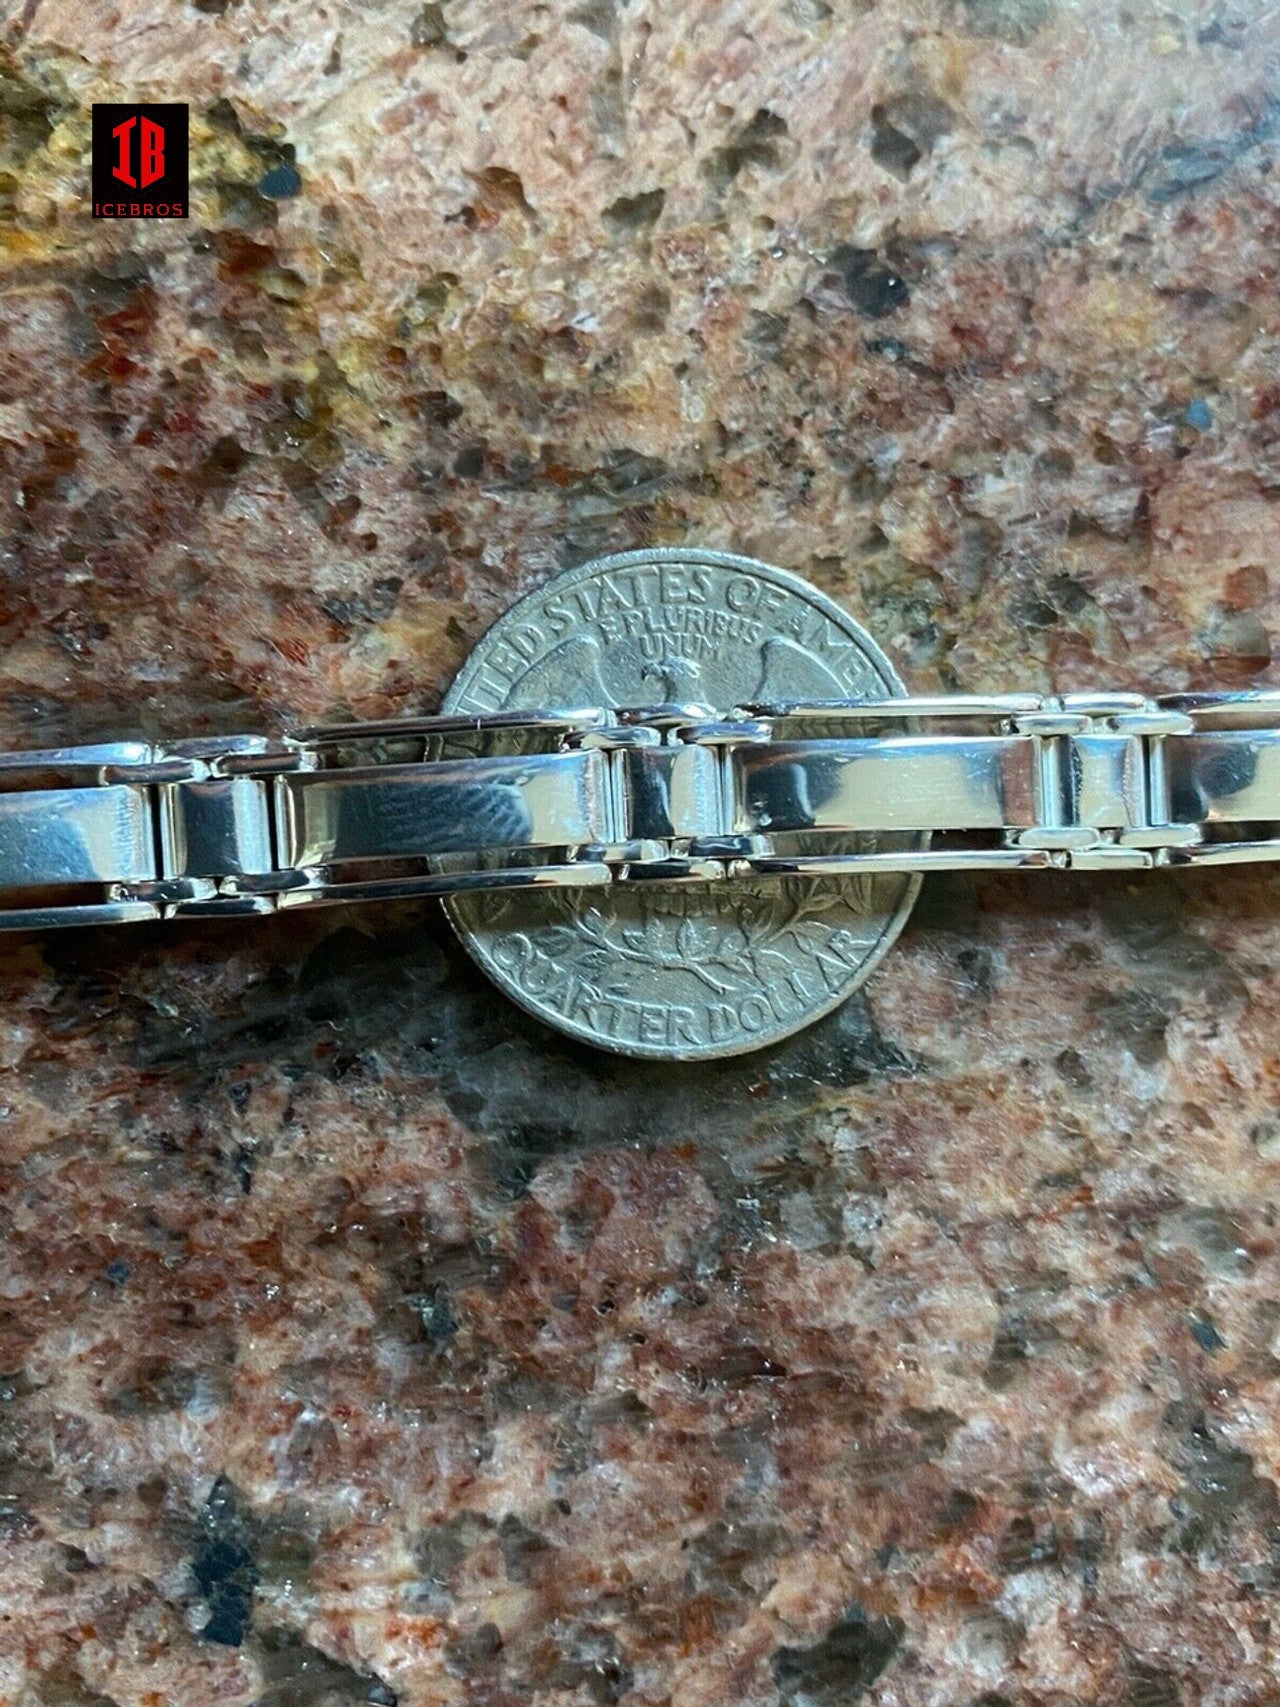 Men’s Real Solid 925 Sterling Silver Presidential Custom Link Bracelet 9mm Wide